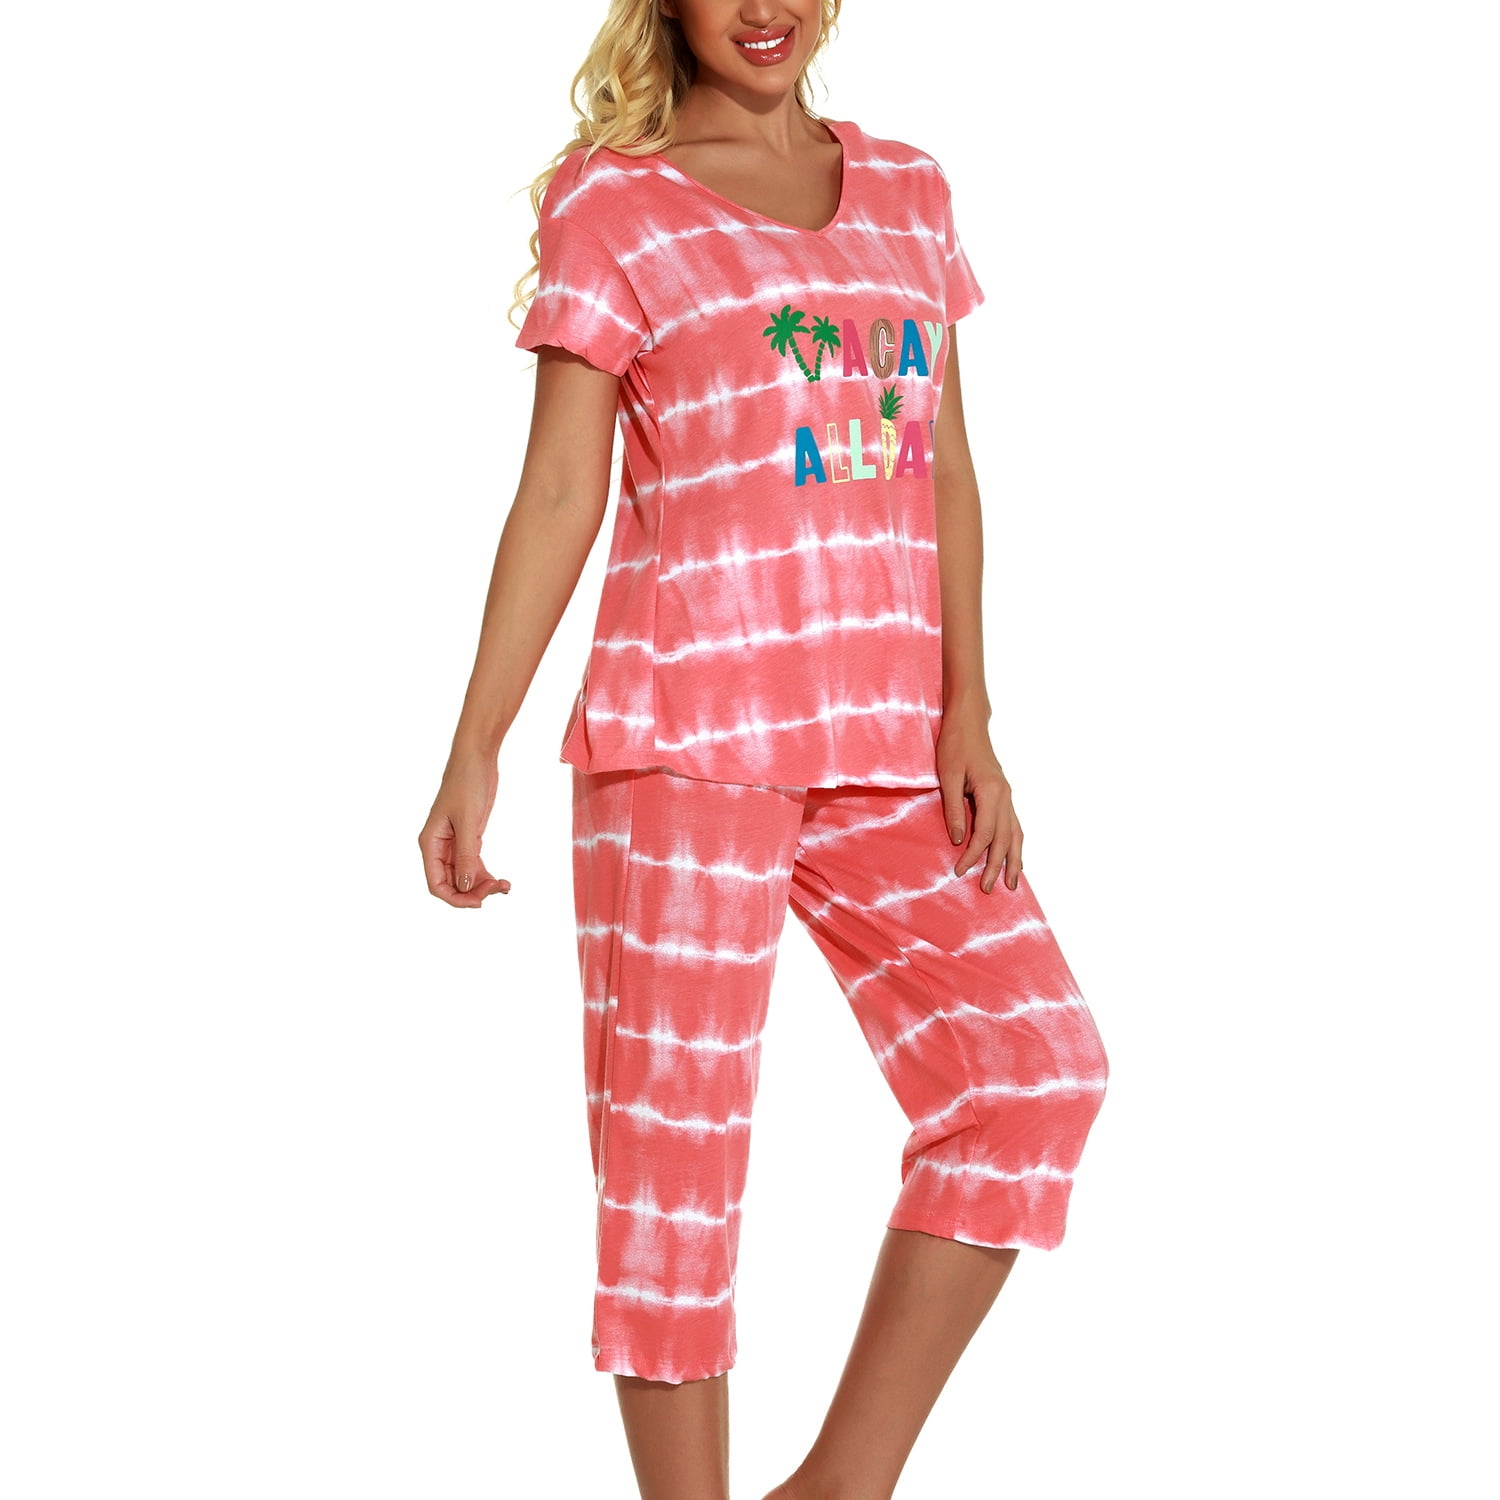 Lu's Chic Women's Cute Pajama Set Cotton Capri Loungewear Soft Short Sleeve  Pjs Comfy Pants Lounge Two Piece Patterned Print Sleepwear Pink Small 